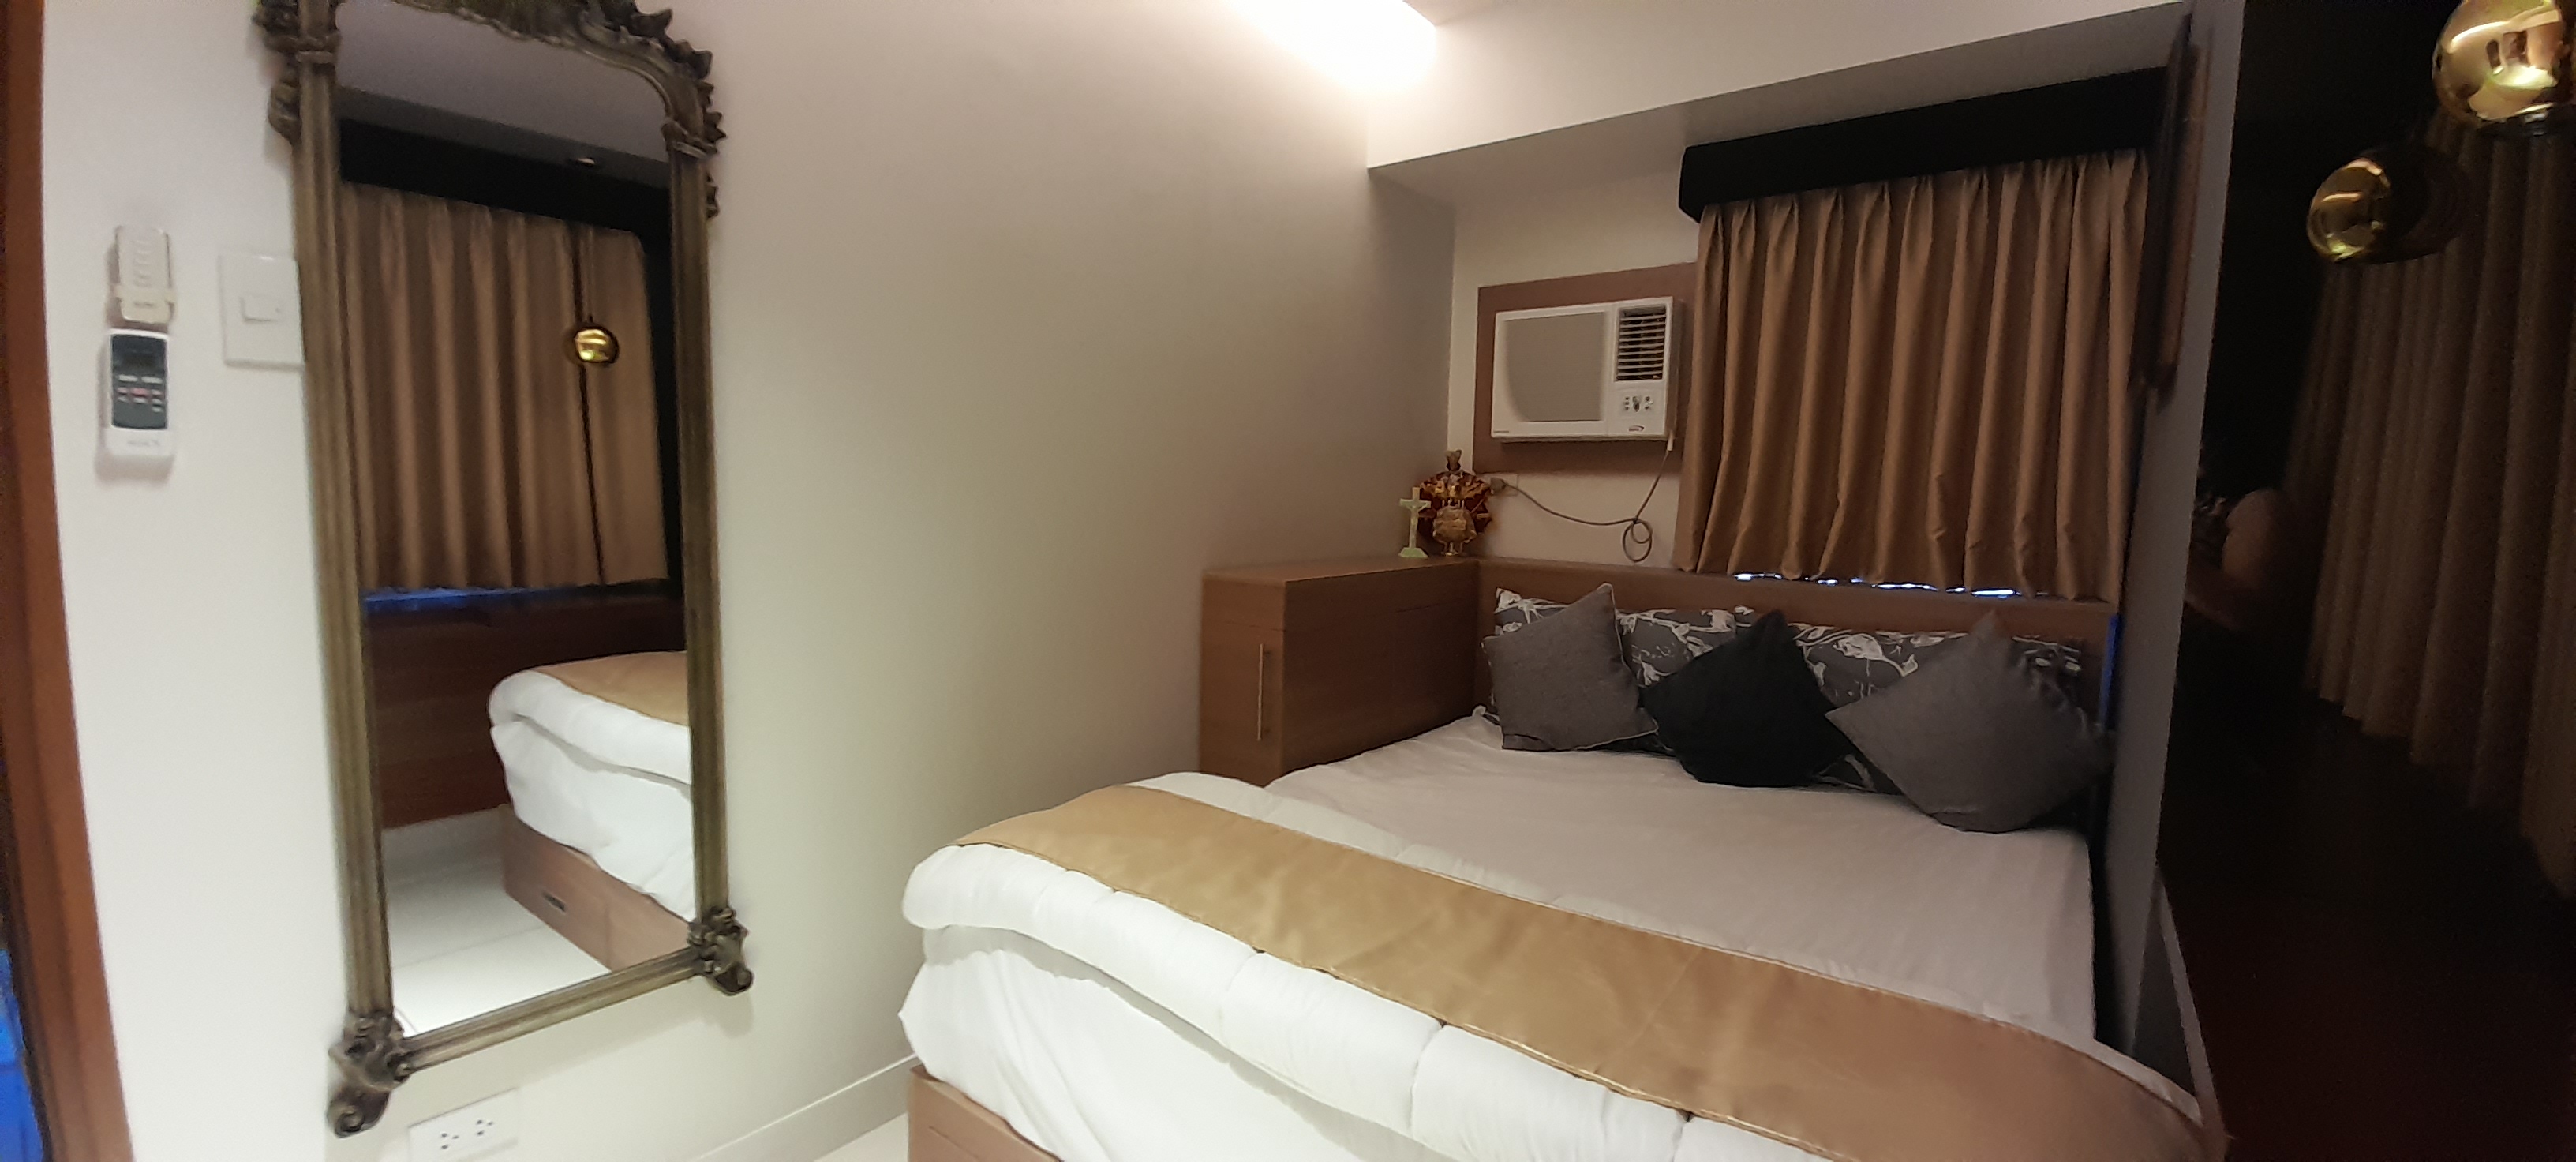 1-bedroom-fully-furnished-with-balcony-at-horizons-101-cebu-city